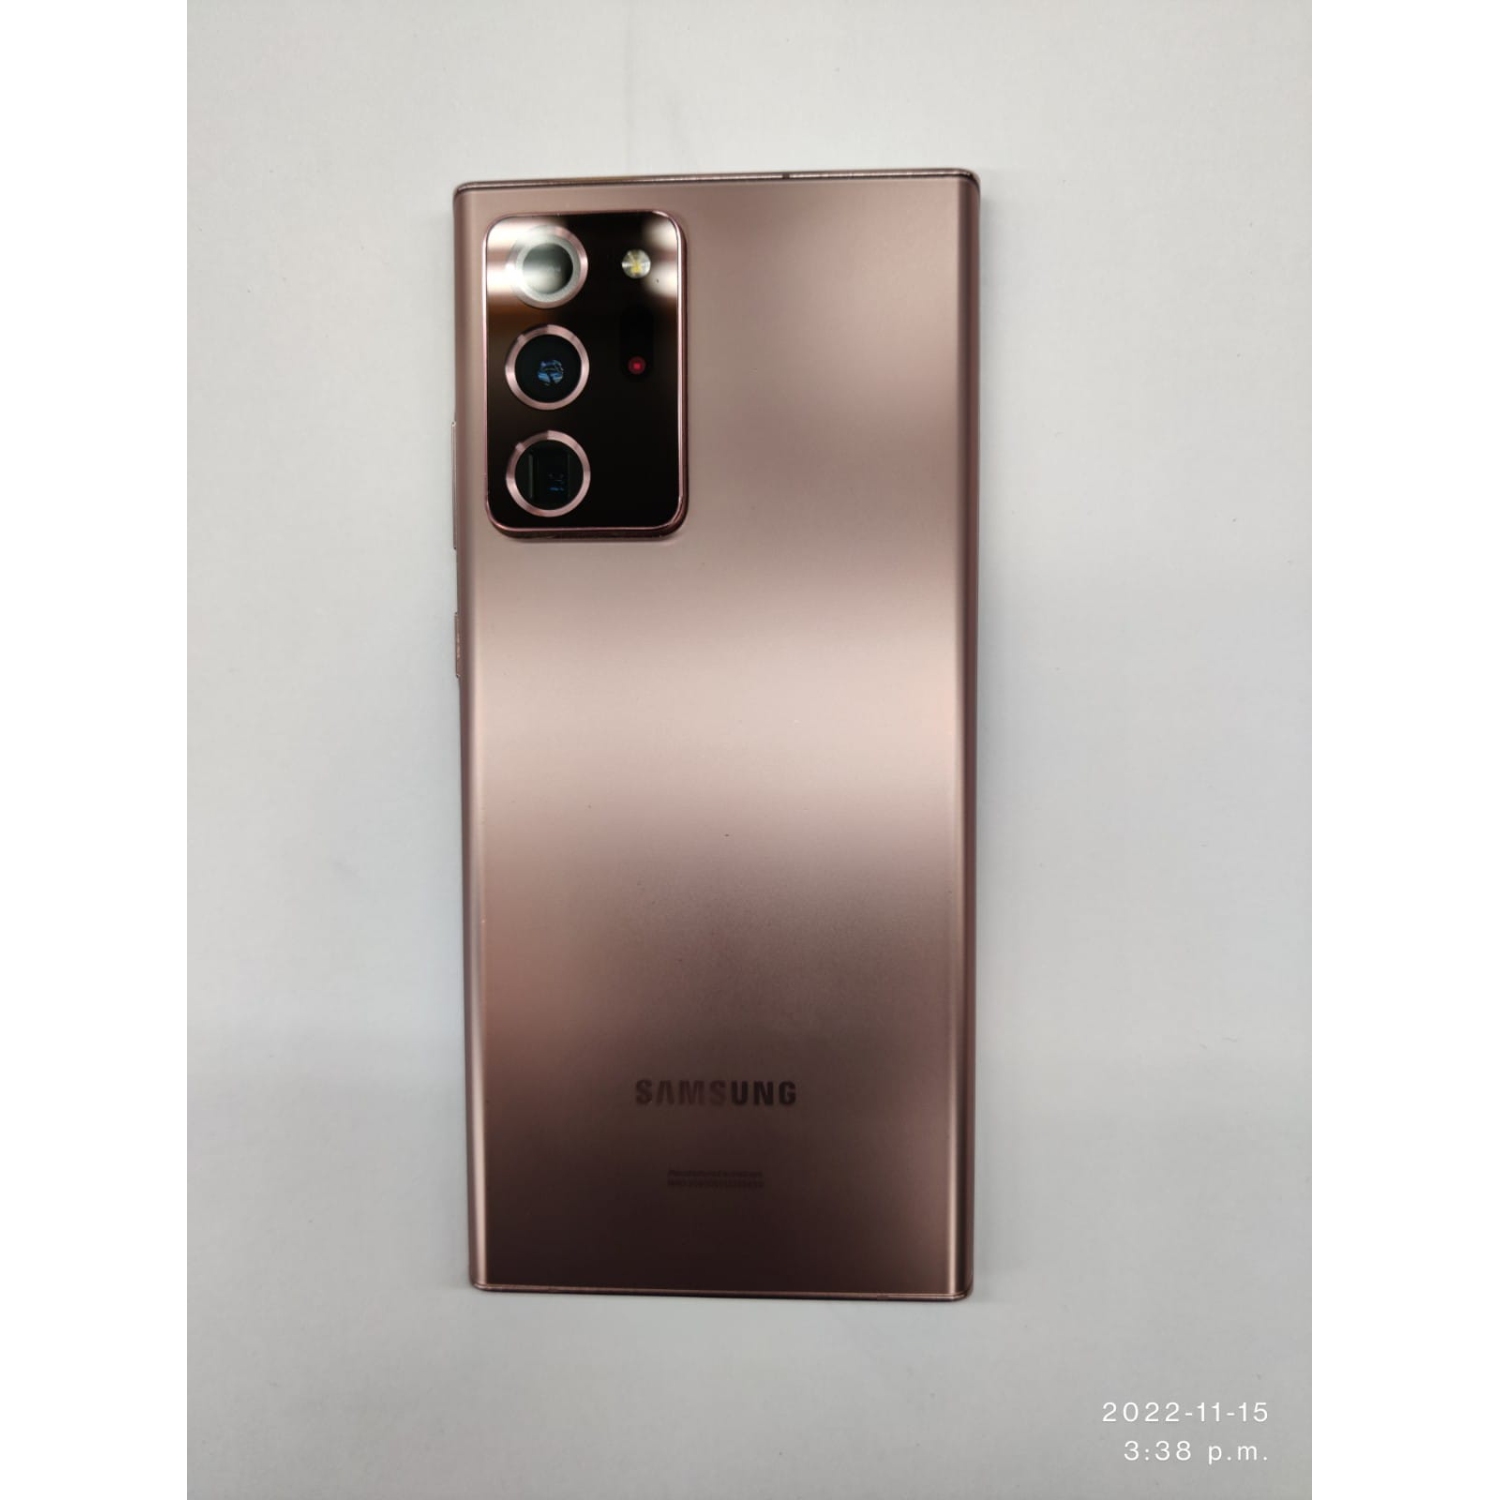 Refurbished (Excellent) - Samsung Galaxy Note 20 Ultra 128GB Smartphone - Mystic Bronze - Unlocked - Certified Refurbished